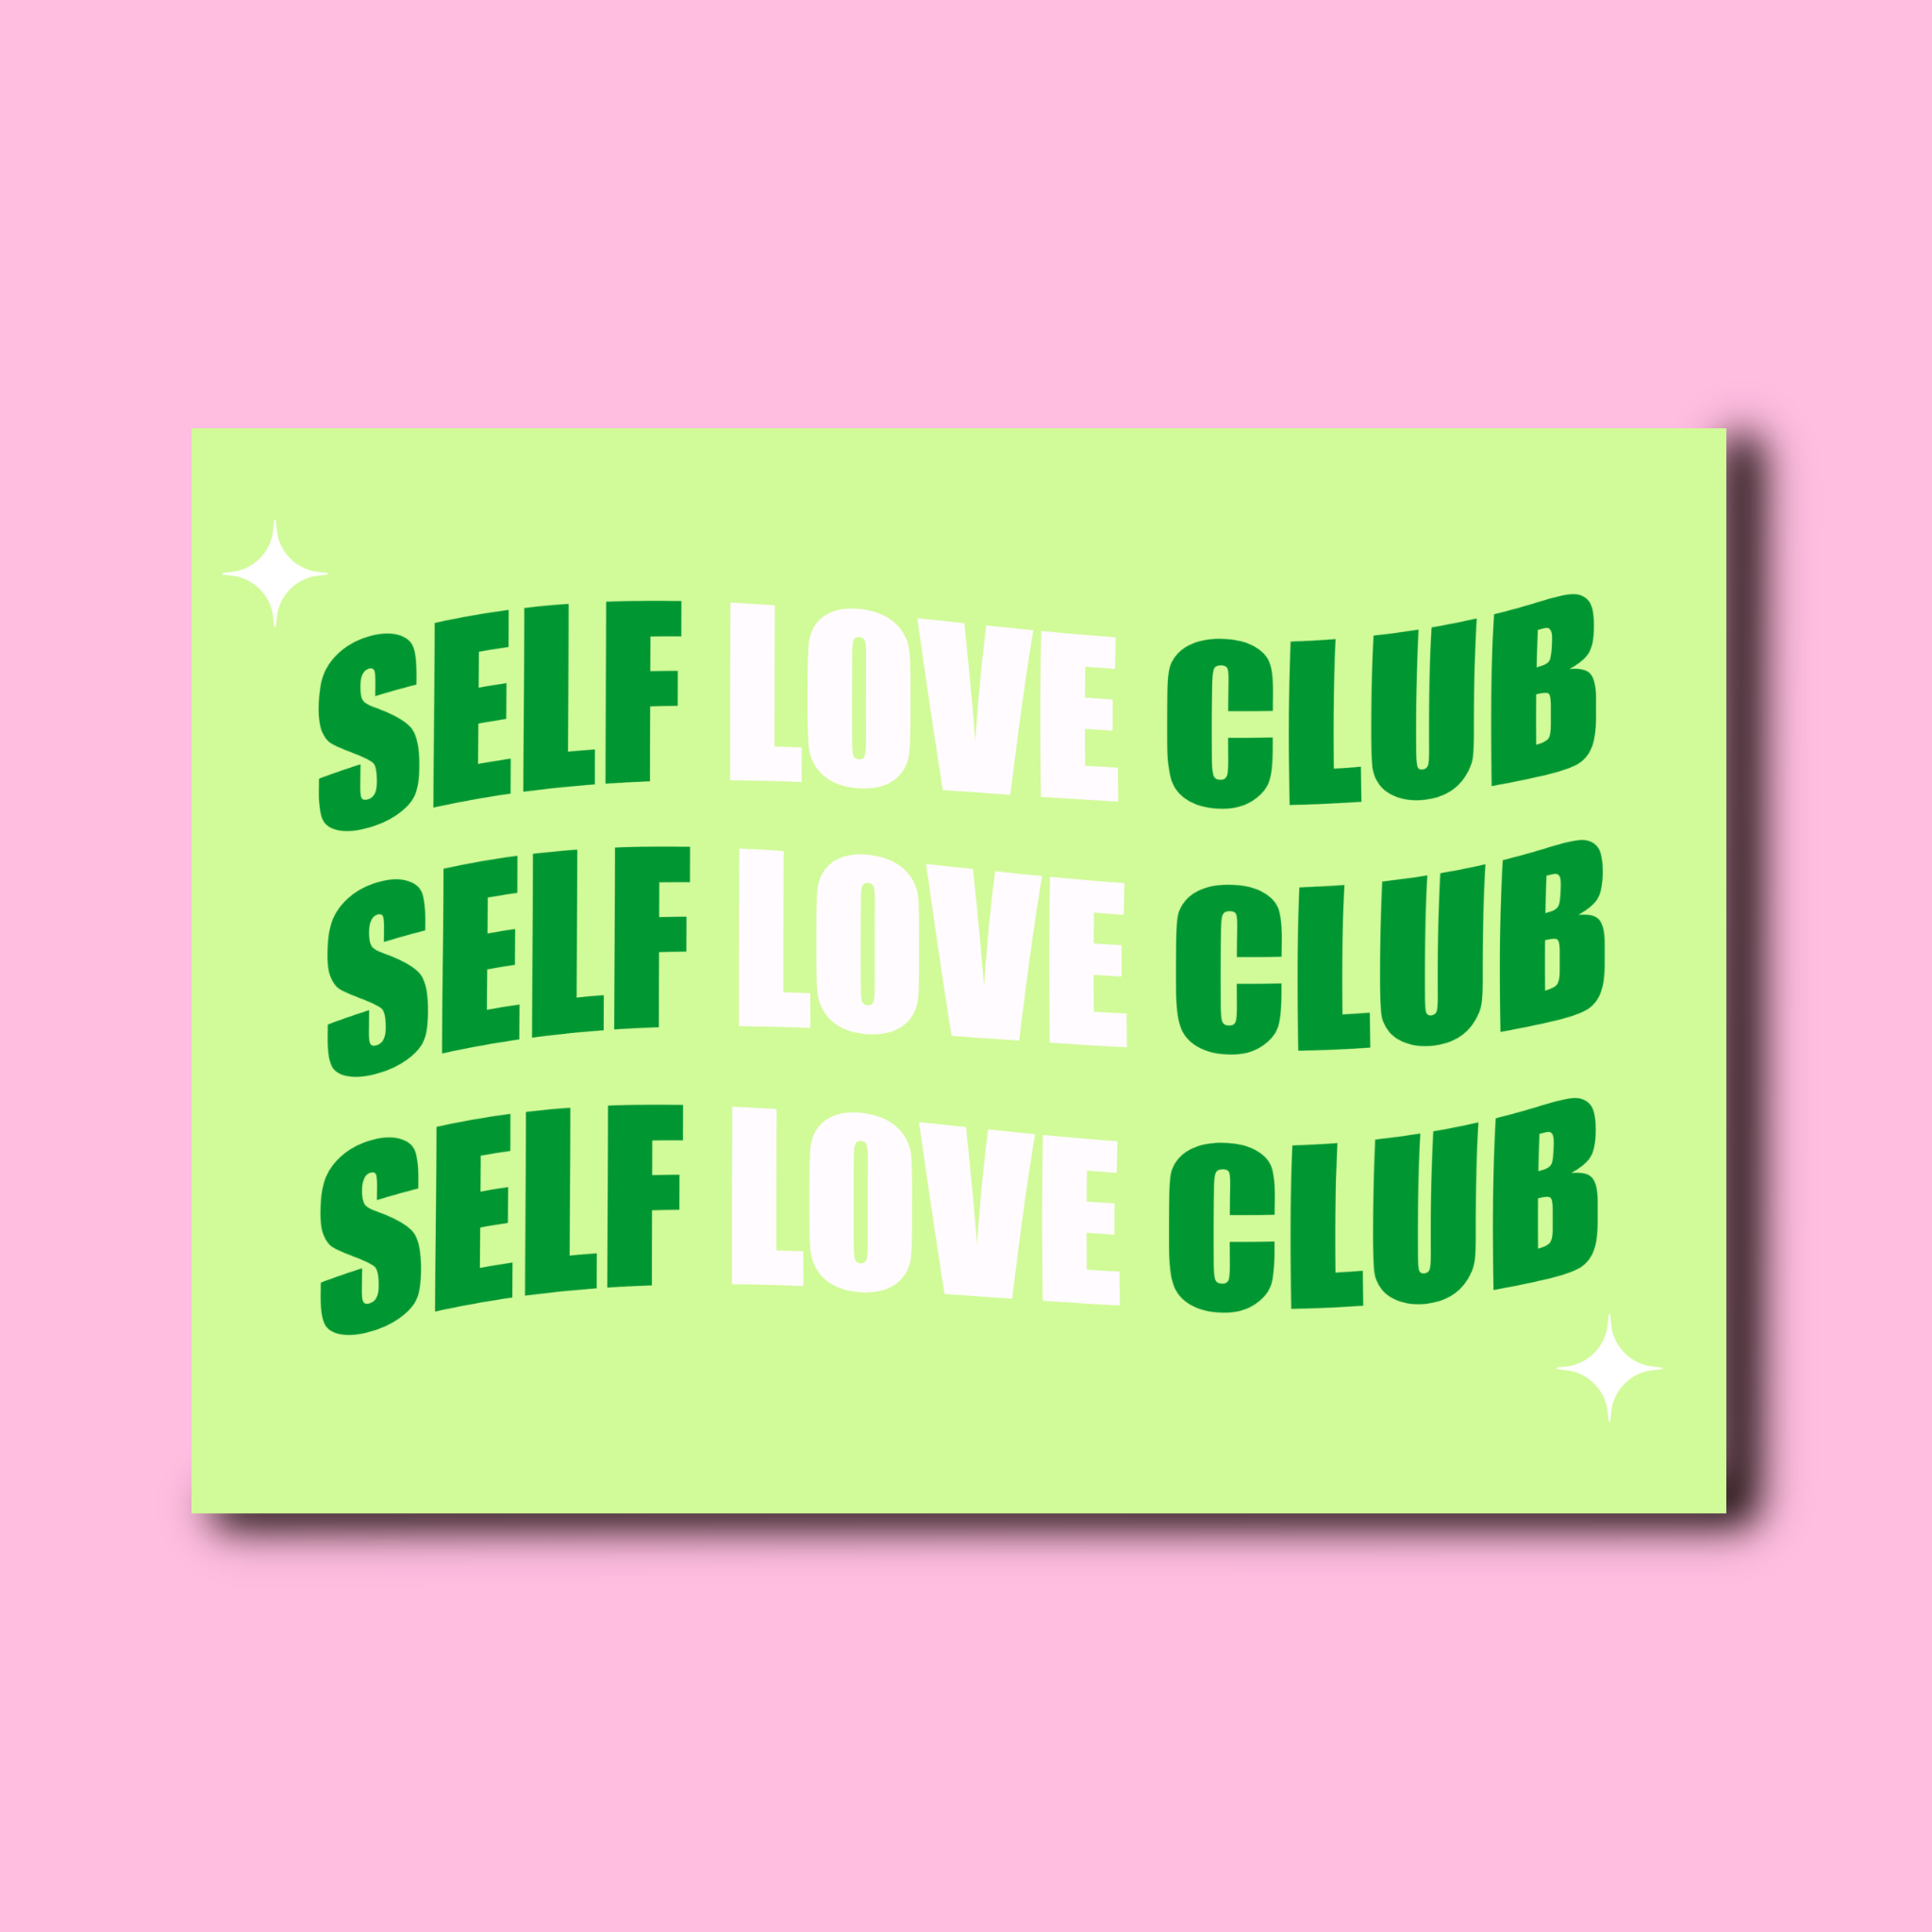 Self love club Old stock